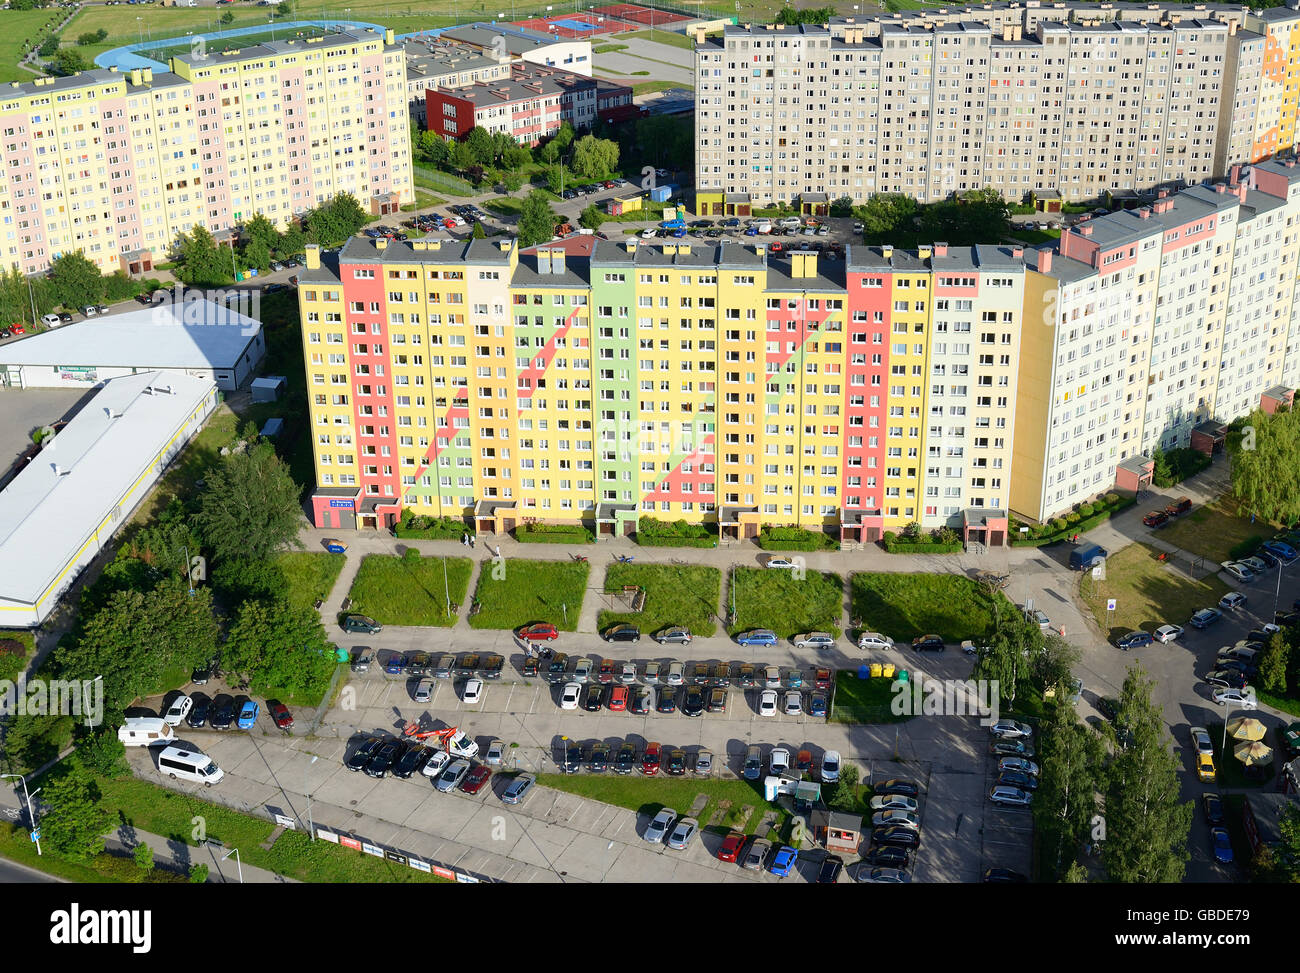 AERIAL VIEW. Colorful housing estate. Walbrzych, Lower Silesian Voivodeship, Poland. Stock Photo